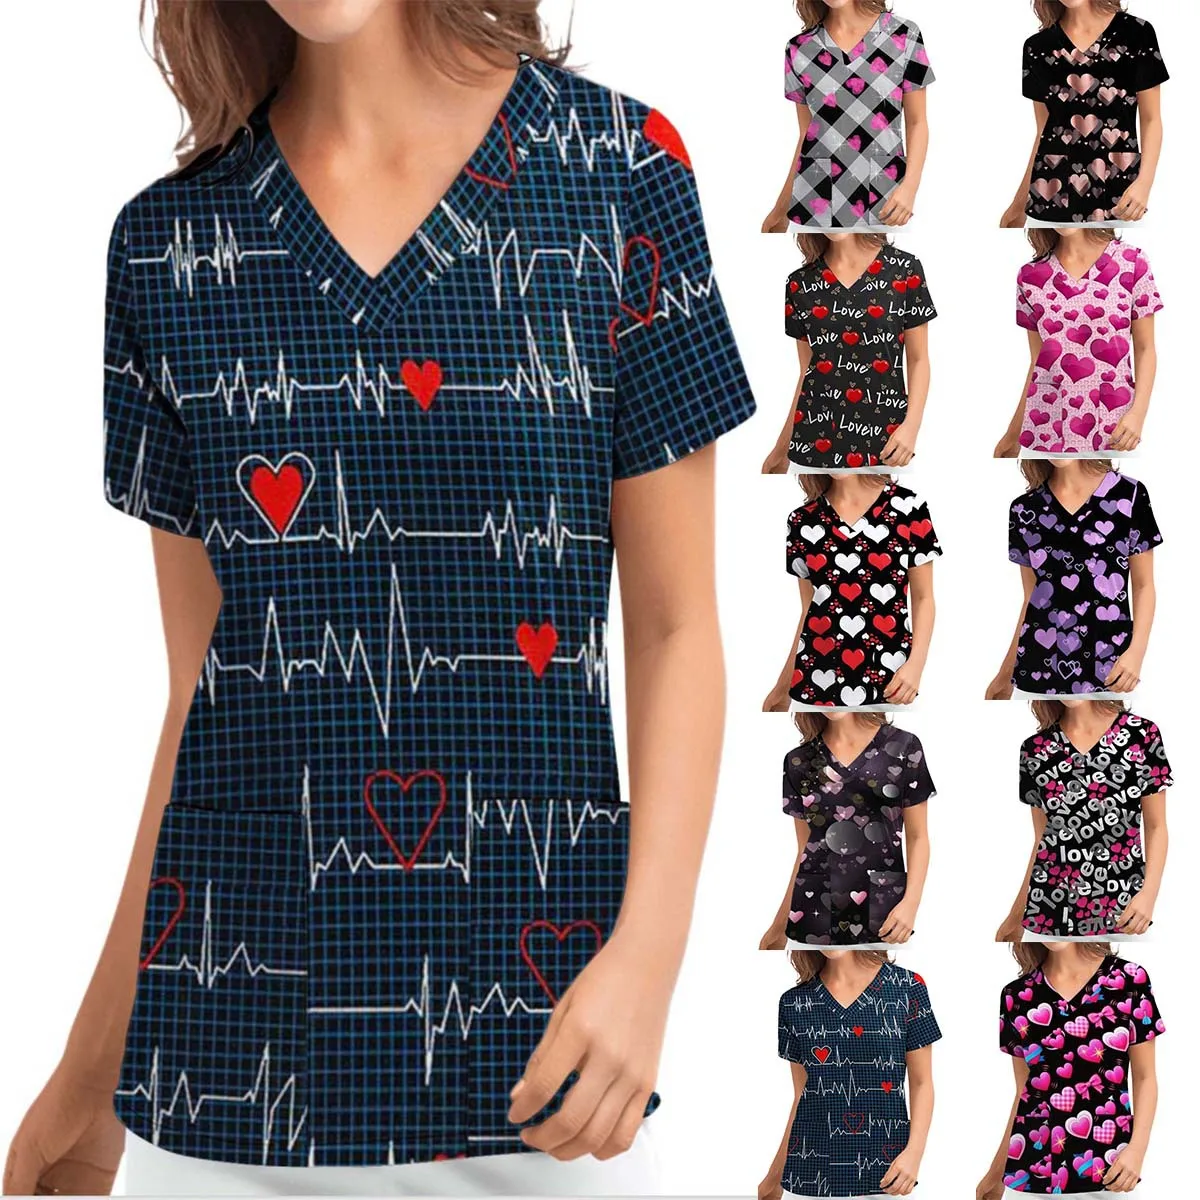 

Love Printed Nursing Scrub Tops Nurse Uniform T-shirt Women V-neck Pocket Overalls Medical Uniforms clinic Beauty Salon Workwear